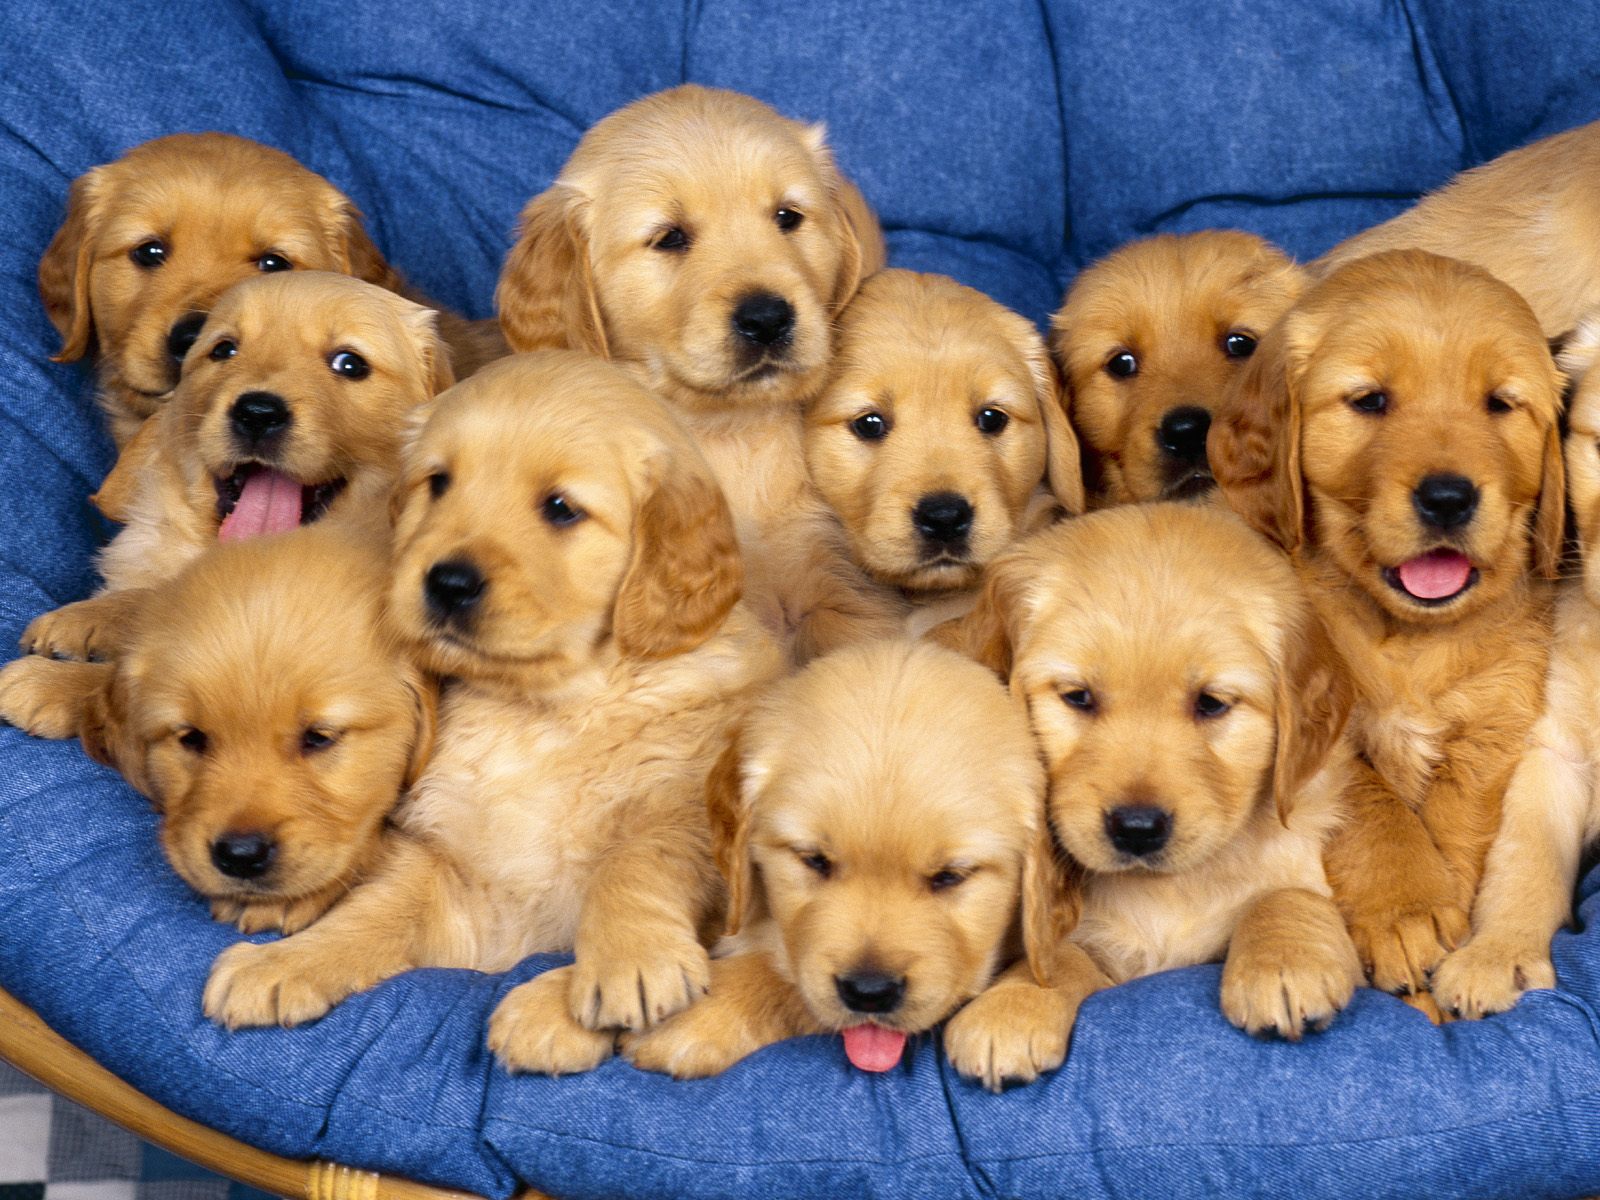 76+] Cute Dogs And Puppies Wallpaper - WallpaperSafari